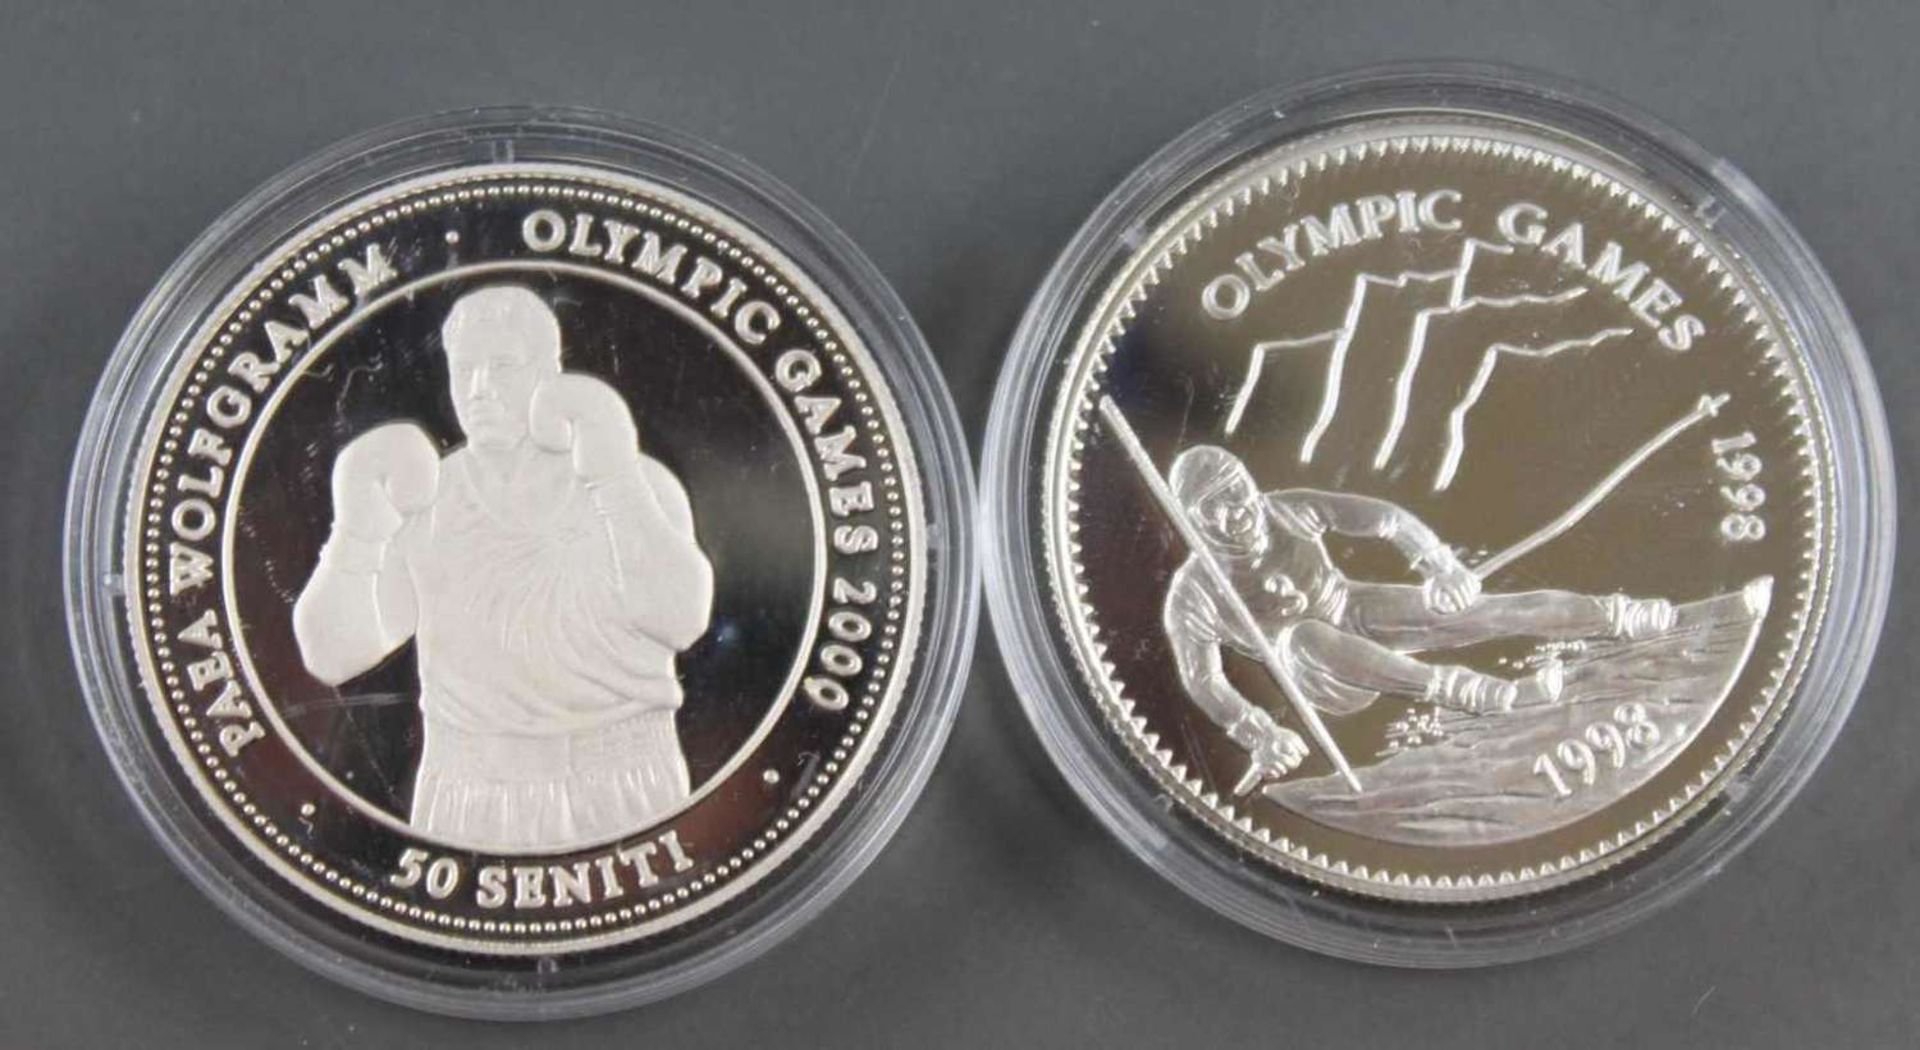 Mongolei / Tonga 1998, 1 x 500 Tukhrik - Silbermünze "OLympische Spiele". Silber 925. Gewicht: 15 g.